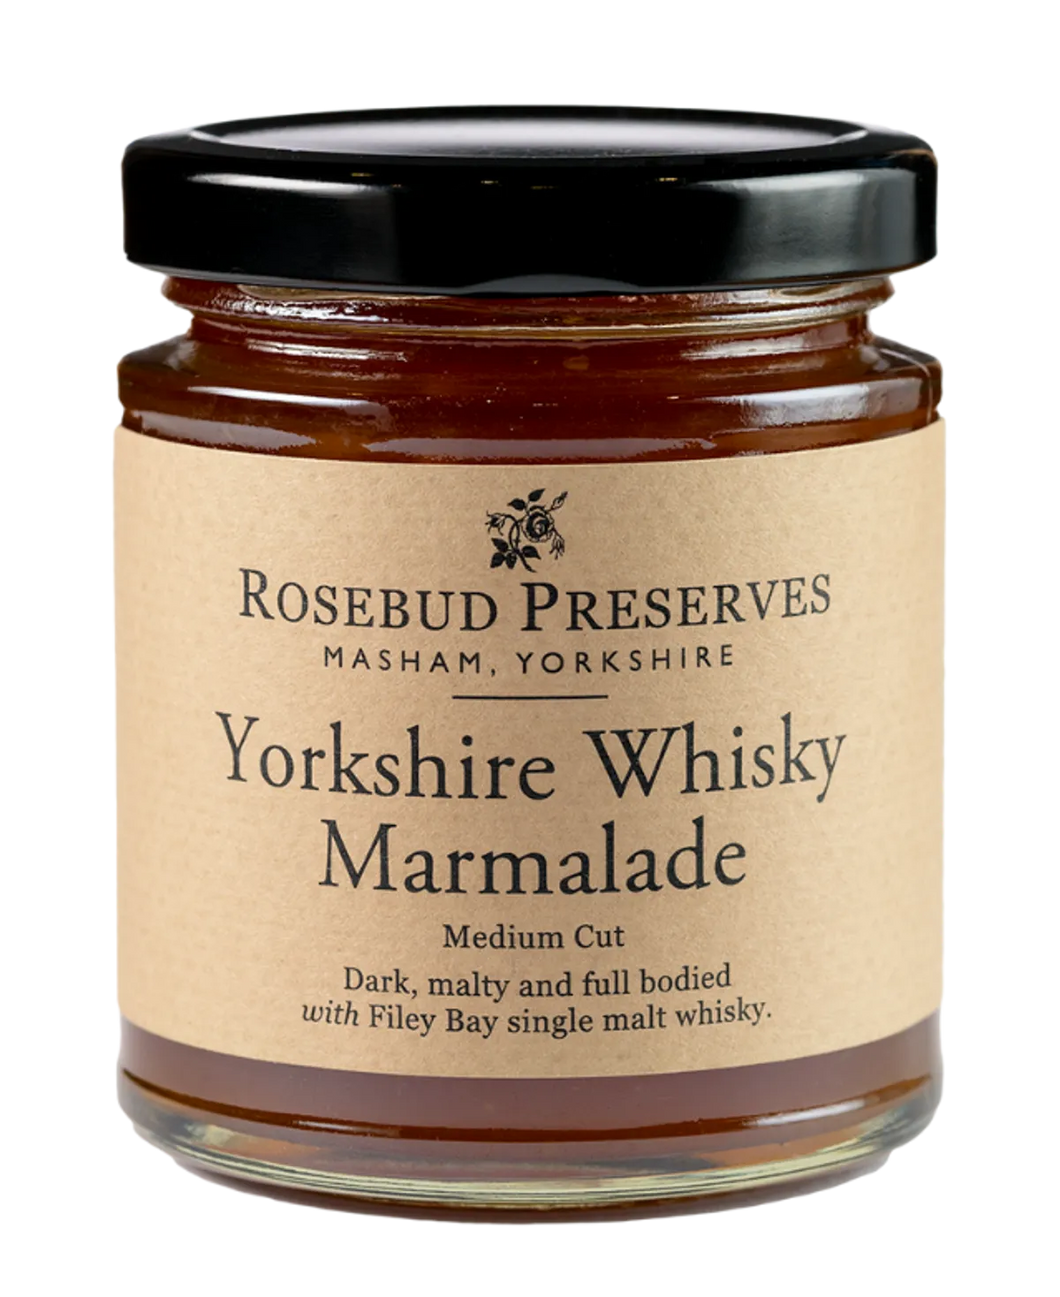 Rosebud Preserves Yorkshire Whisky Marmalade 227g